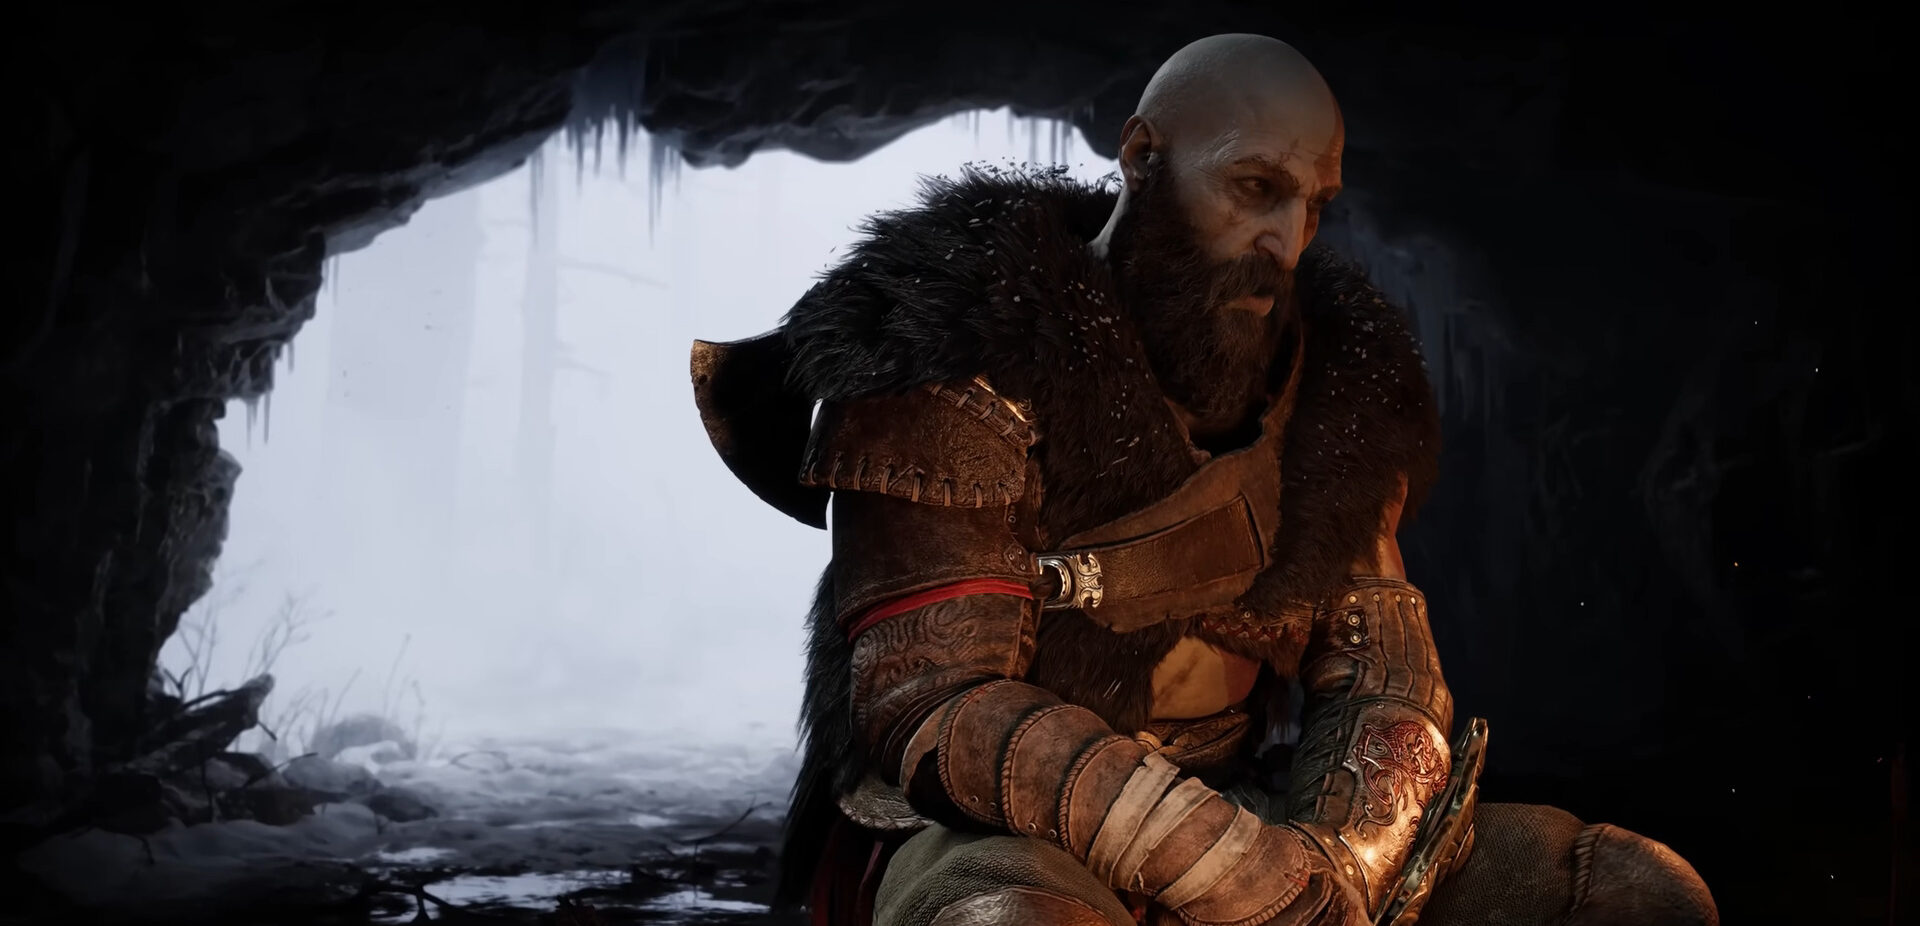 Kratos (Christopher Judge) warms himself by the fire ahead of his new adventure in God of War: Ragnarök (2022), Sony Santa Monica Studios via YouTube